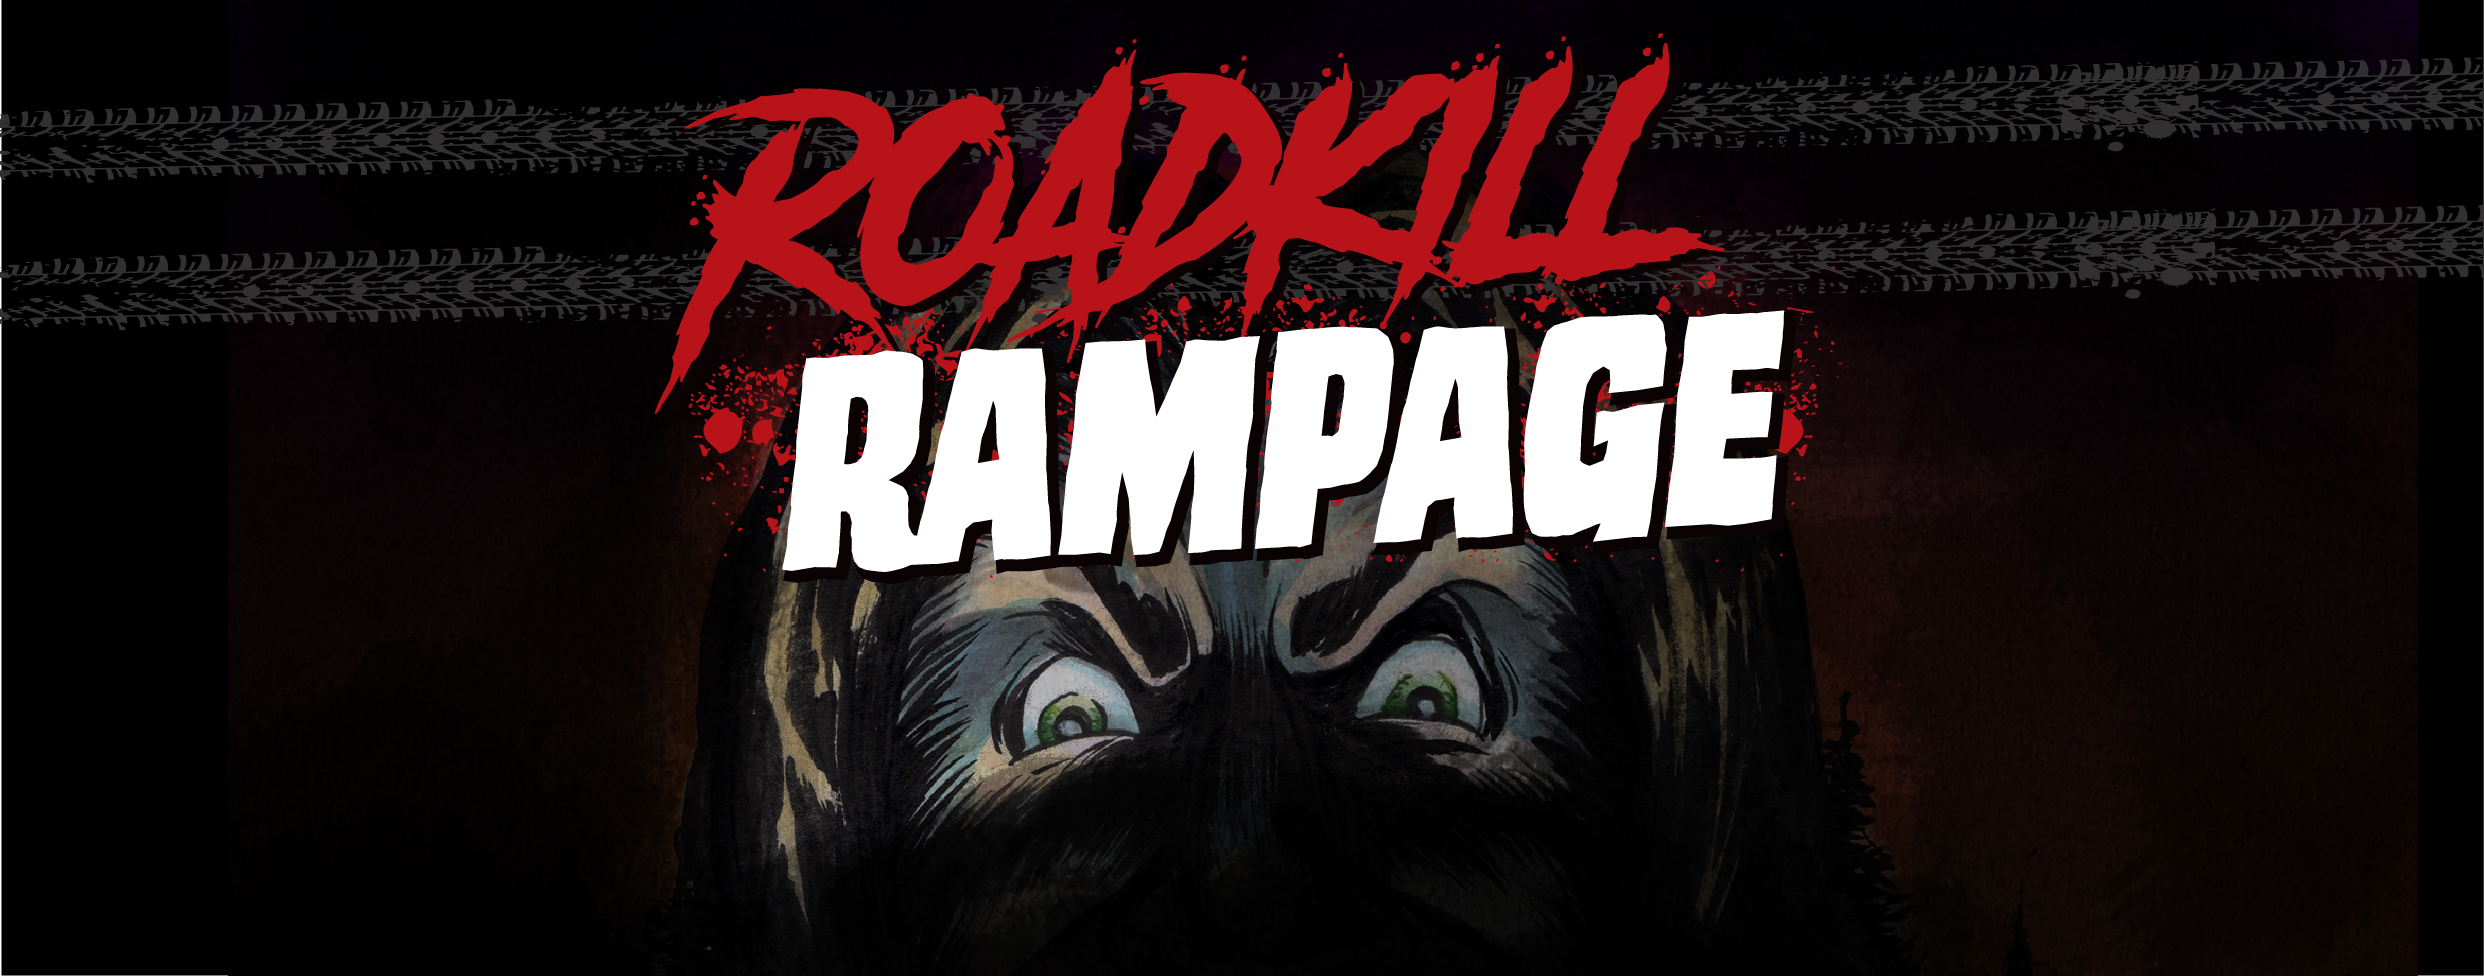 Roadkill Rampage Comic Series Hazzum Productions